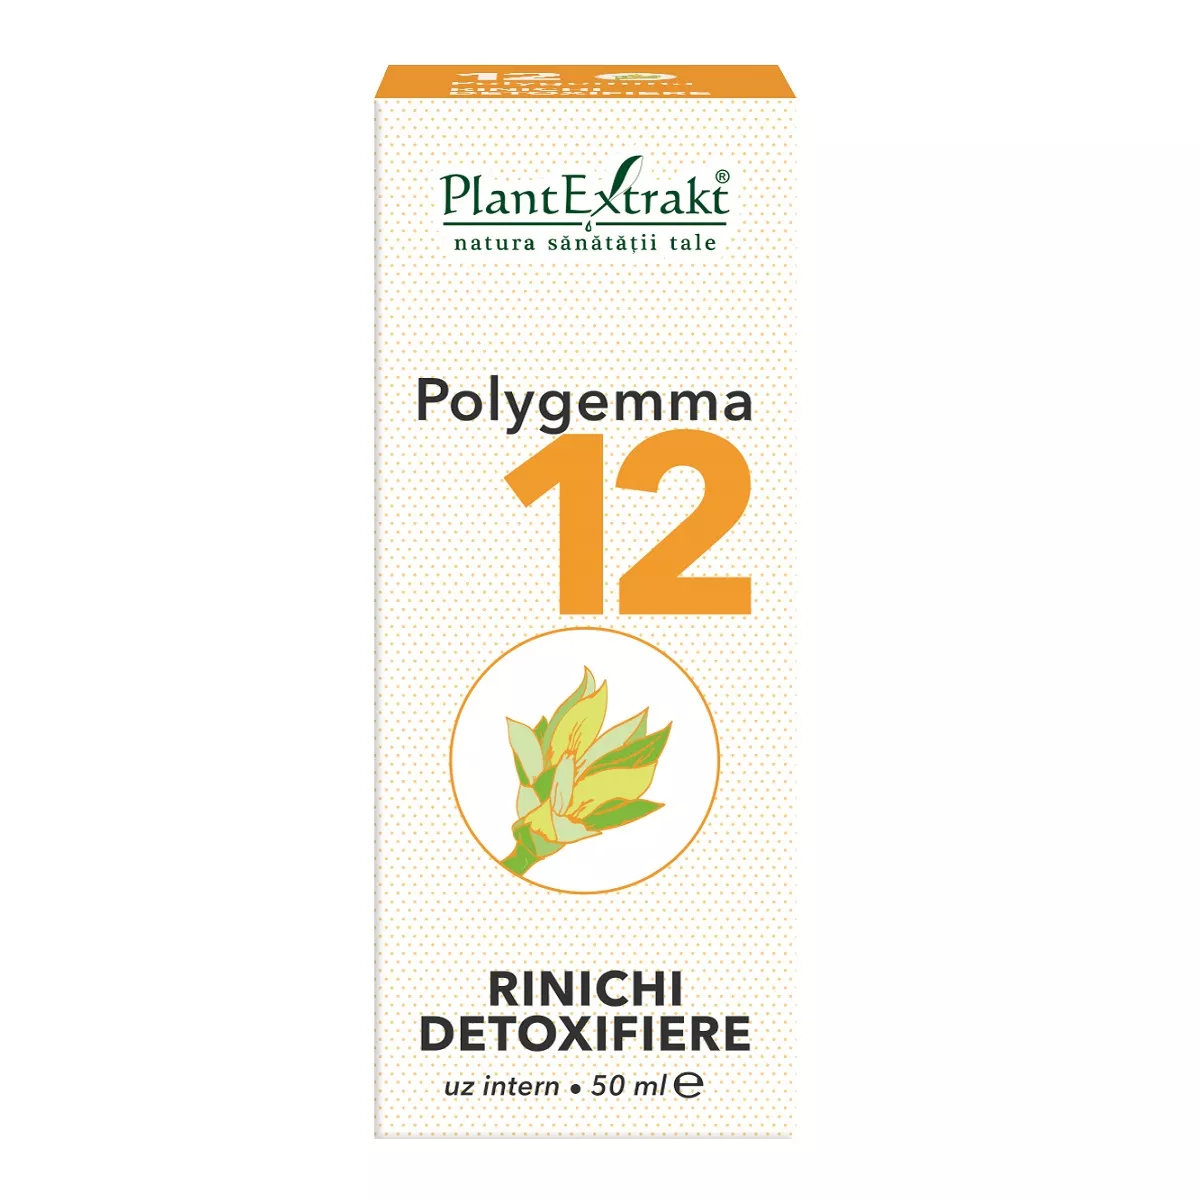 Polygemma 12 Rinichi detoxifiere, 50 ml, Plantextrakt, [],remediumfarm.ro